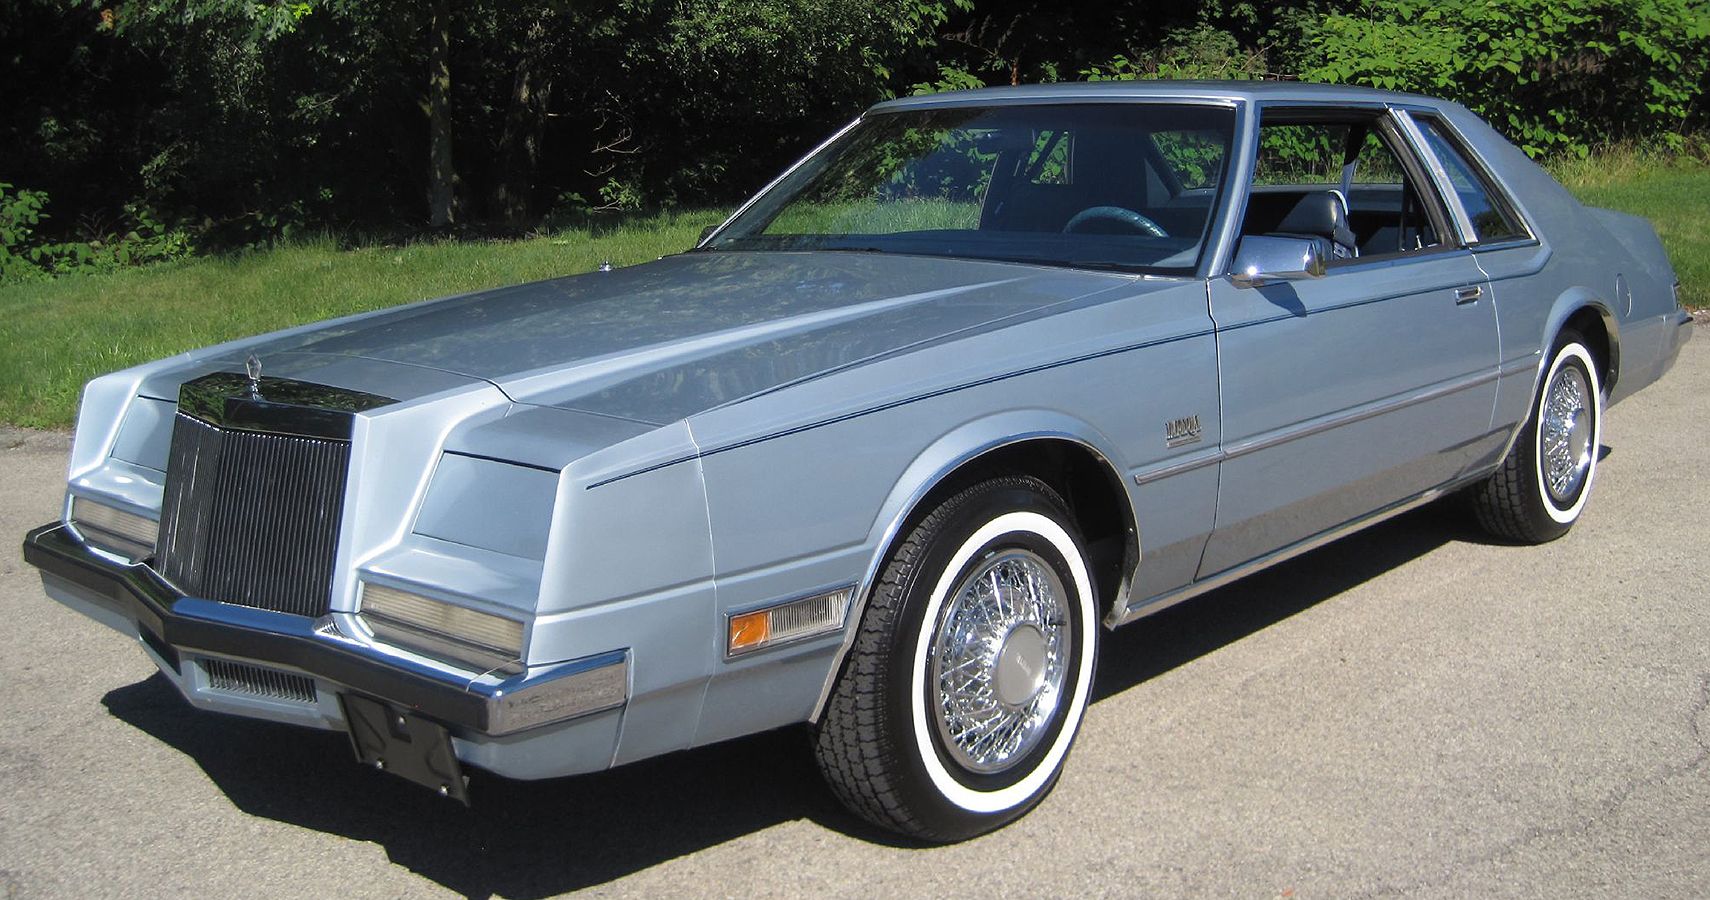 1982 Chrysler Imperial Frank Sinatra Edition: $14,000